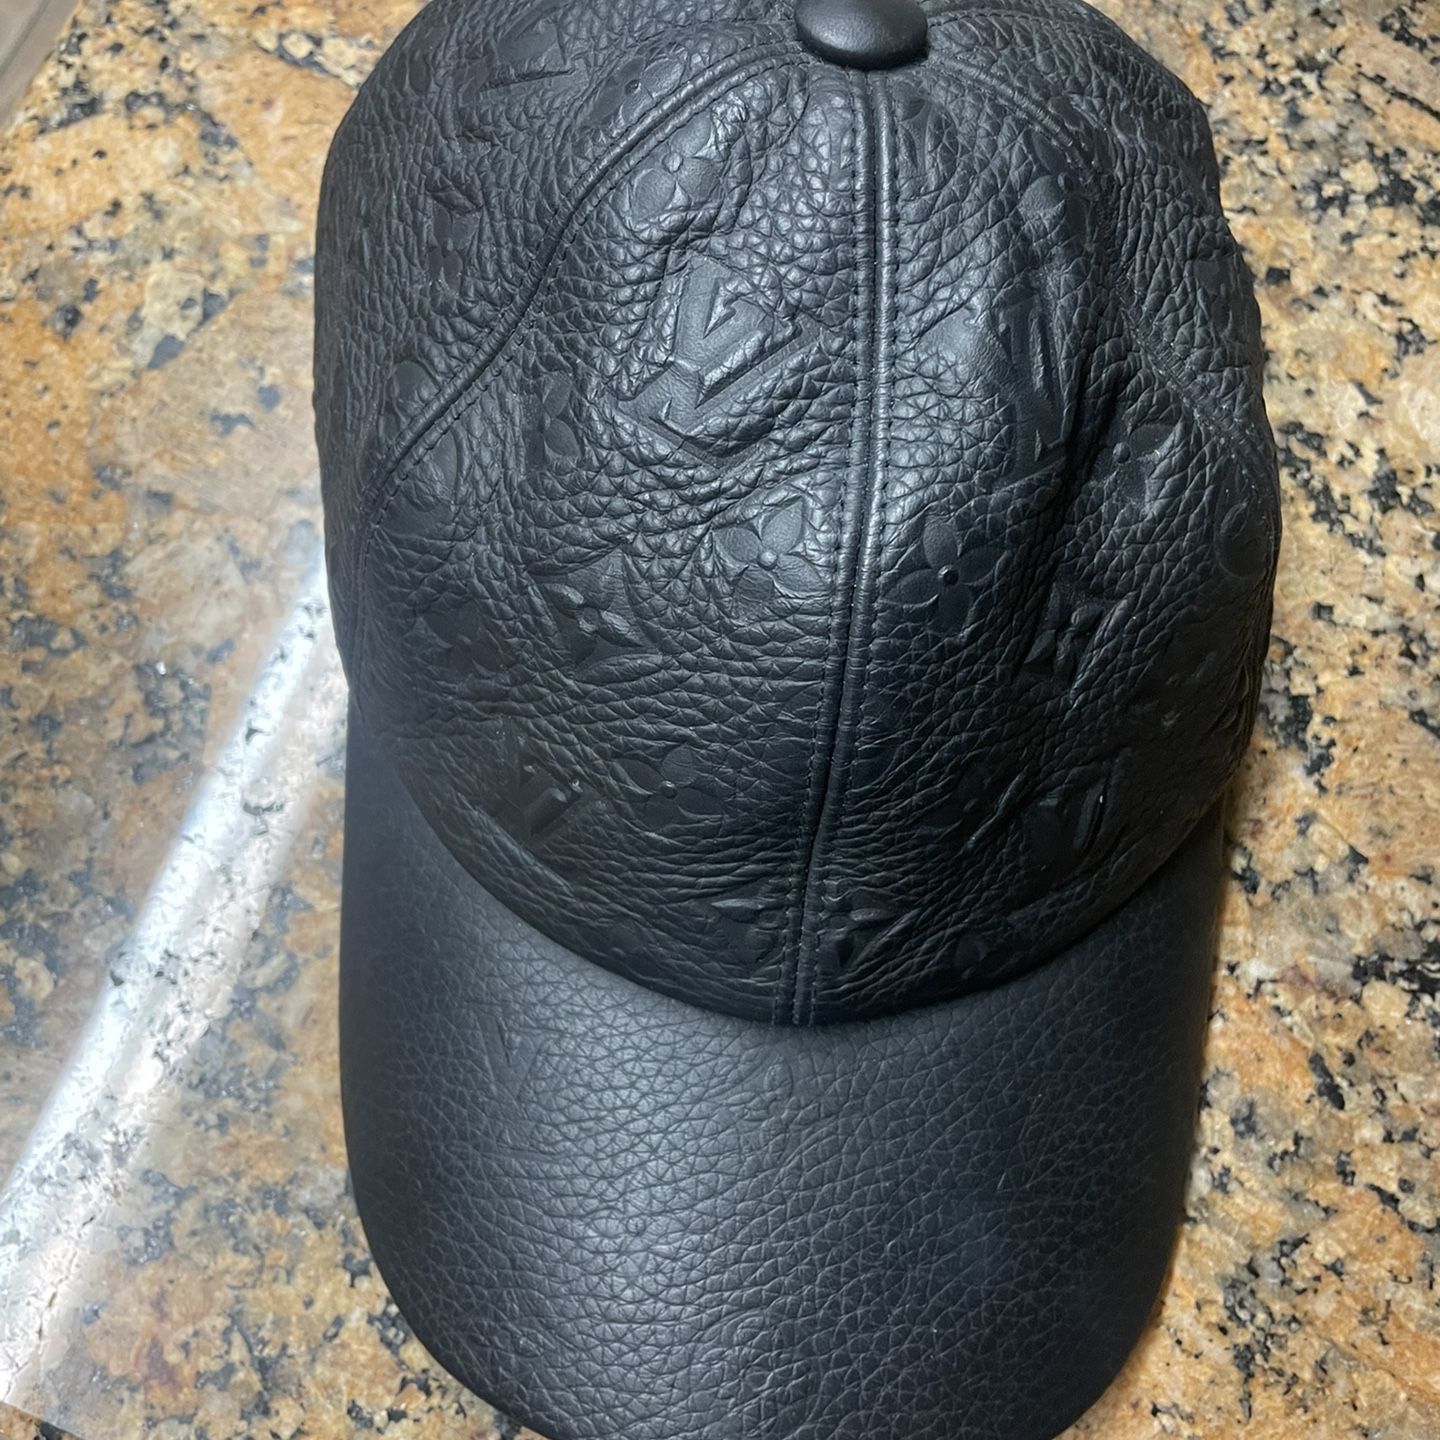 louis vuitton hat black leather for Sale in Phoenix, AZ - OfferUp